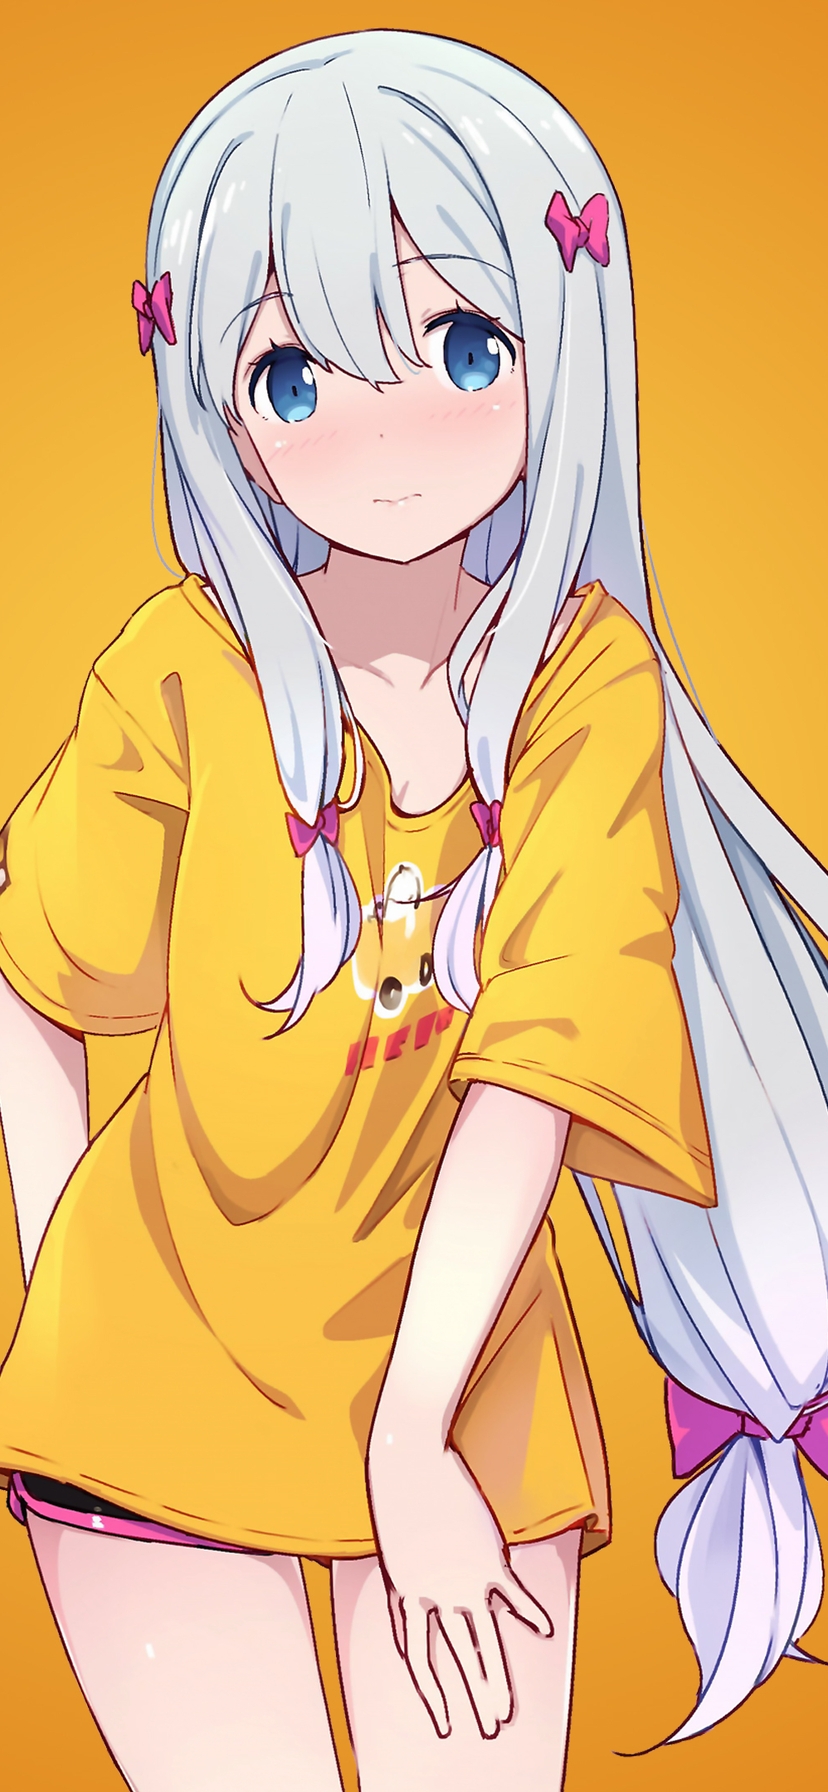 Image: Anime, Erromango-Sensei, Eromanga-sensei, girl, Sagiri Izumi, white-haired, long-haired, bow, orange background, jacket